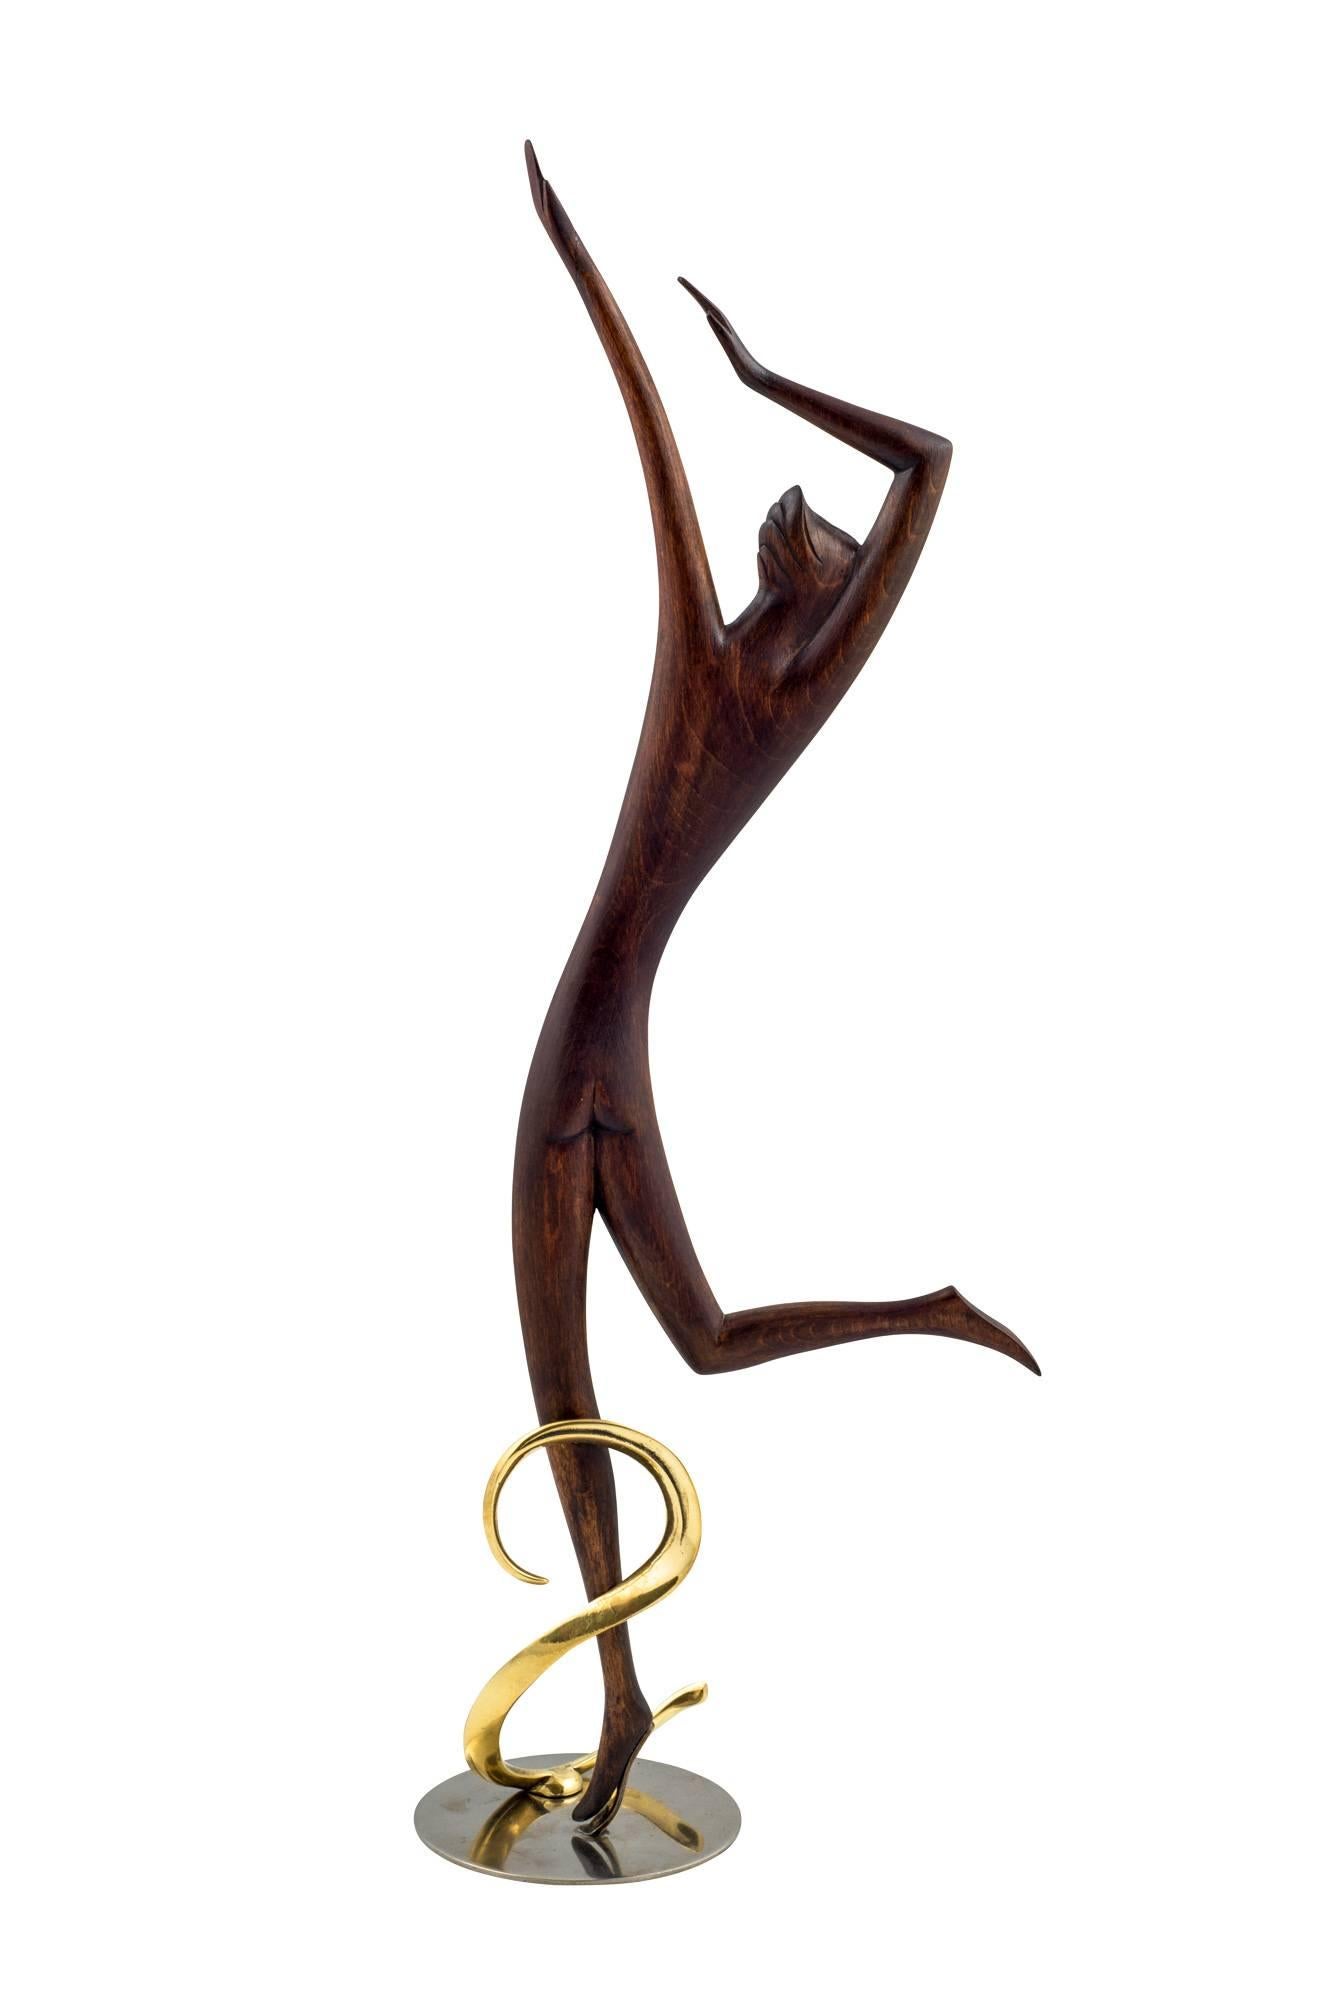 Art Deco Hagenauer Dancer 1950s Brass Nickel-Plated Precious Wood Leopold Collection